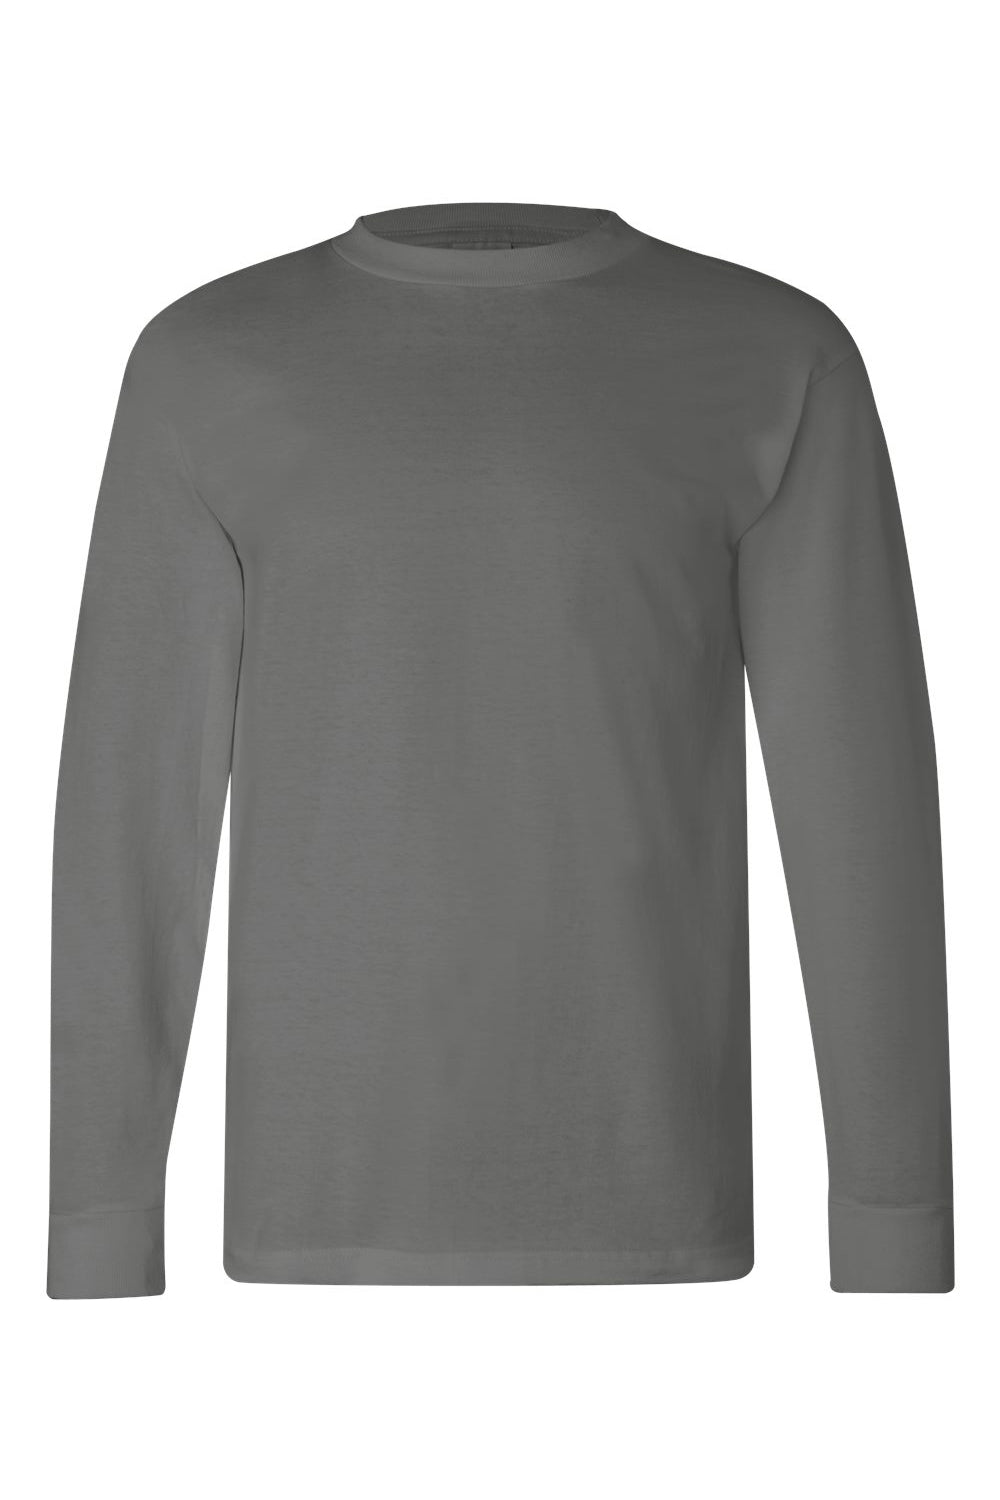 Bayside BA6100 Mens USA Made Long Sleeve Crewneck T-Shirt Charcoal Grey Flat Front